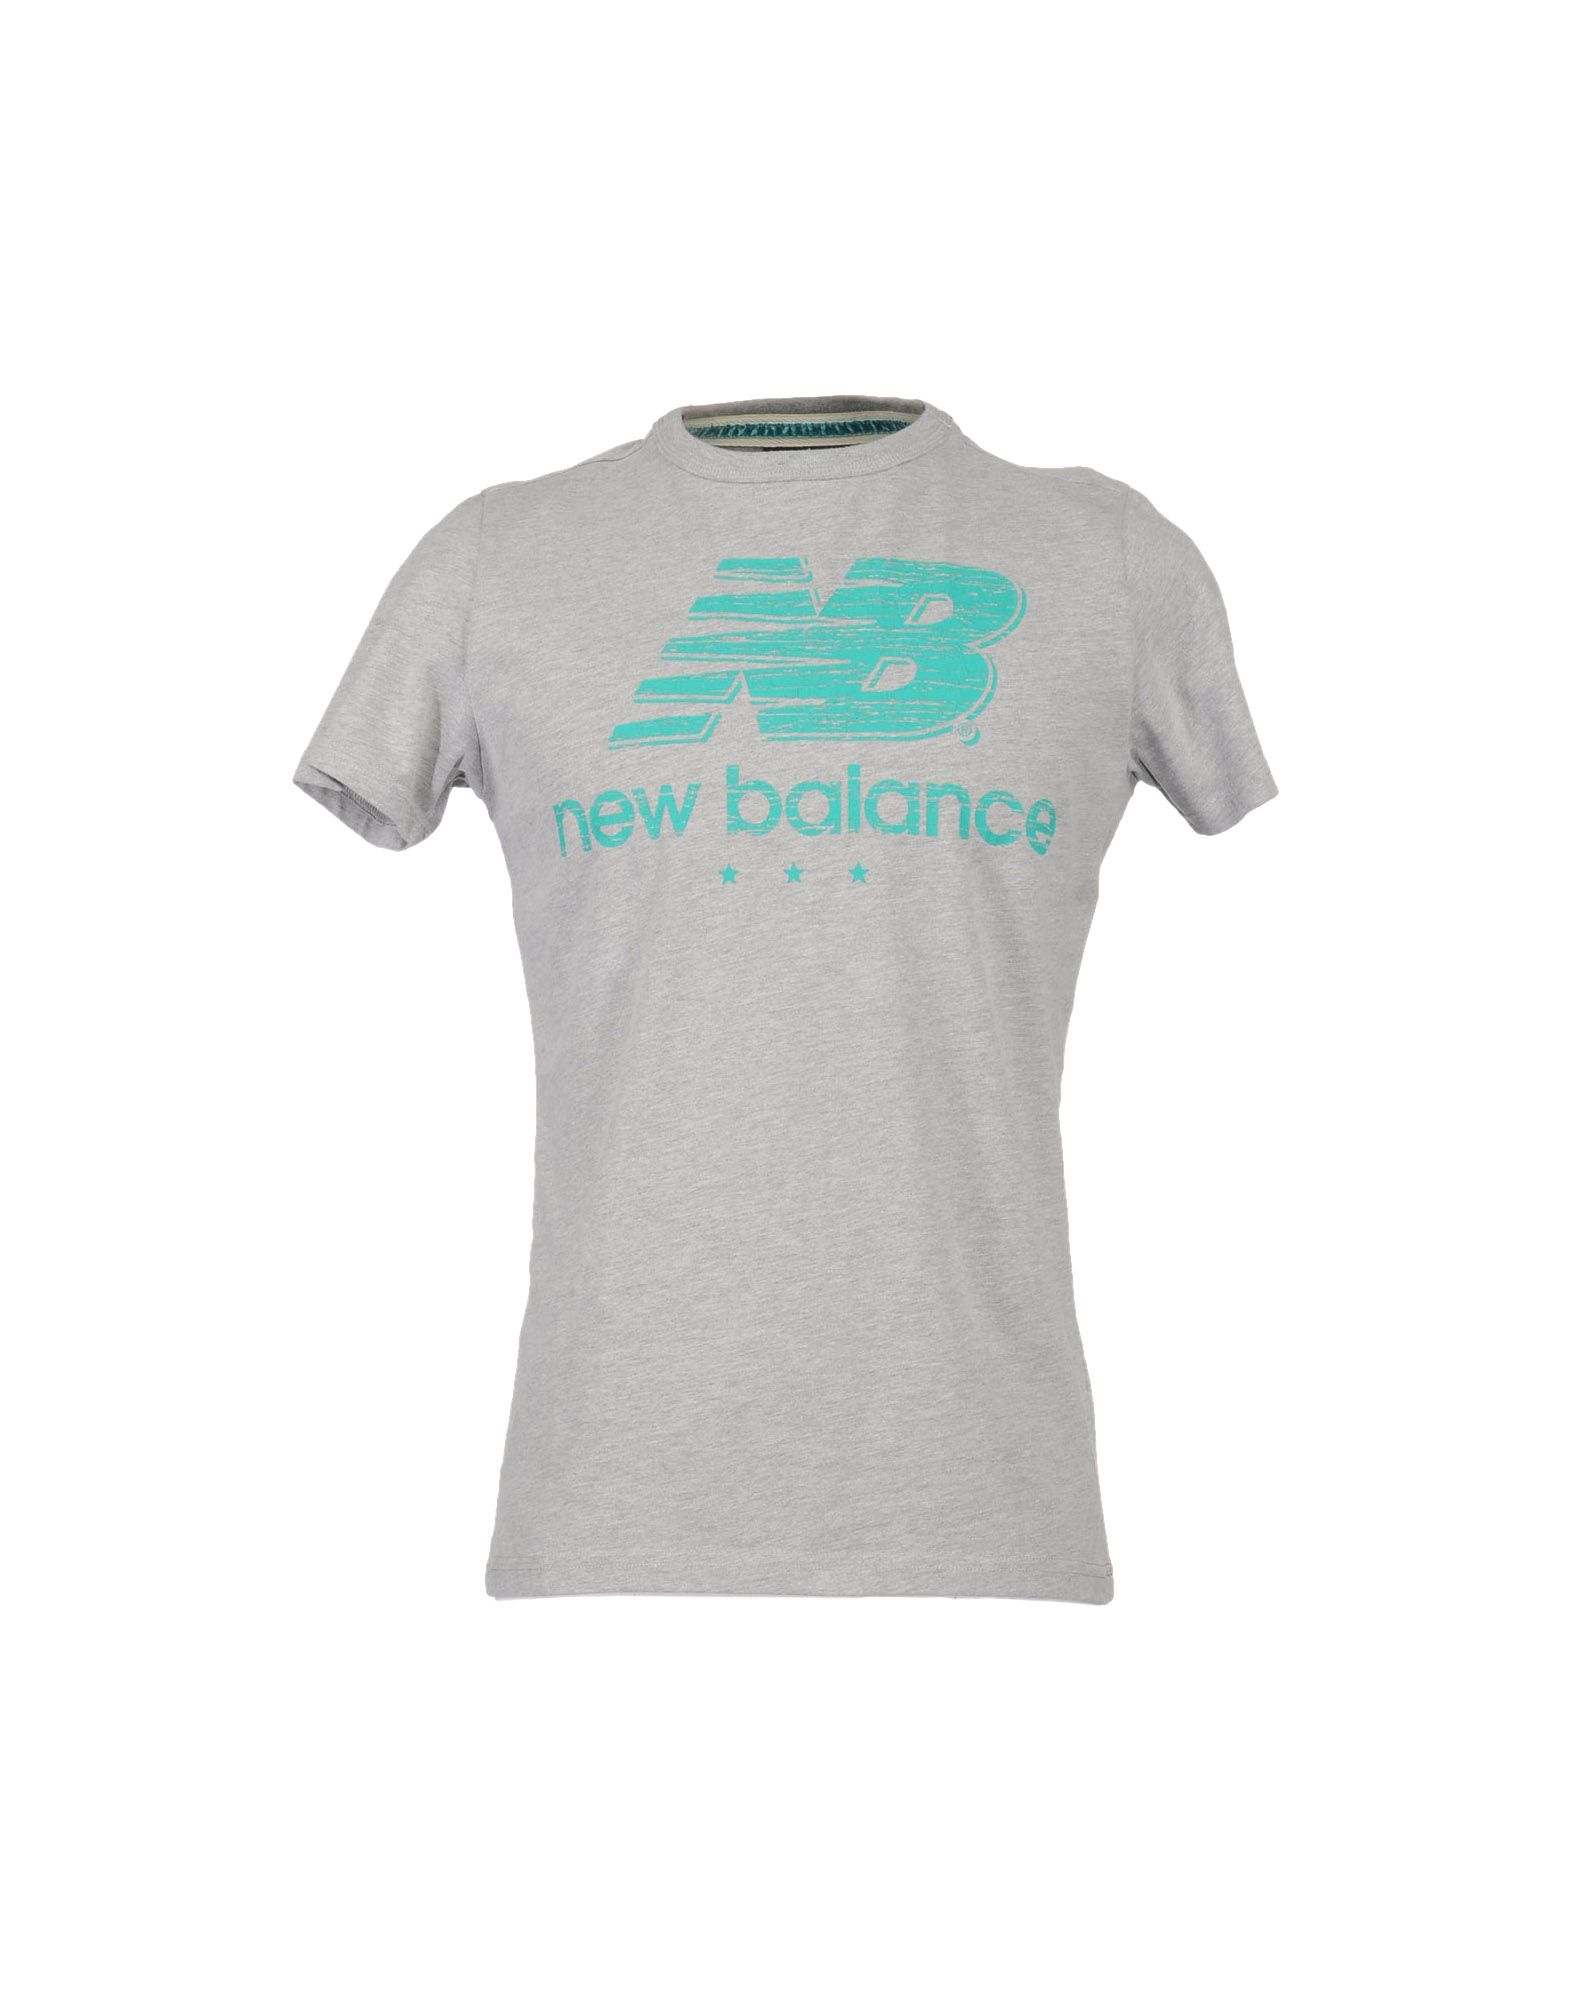 Foto new balance camisetas de manga corta
